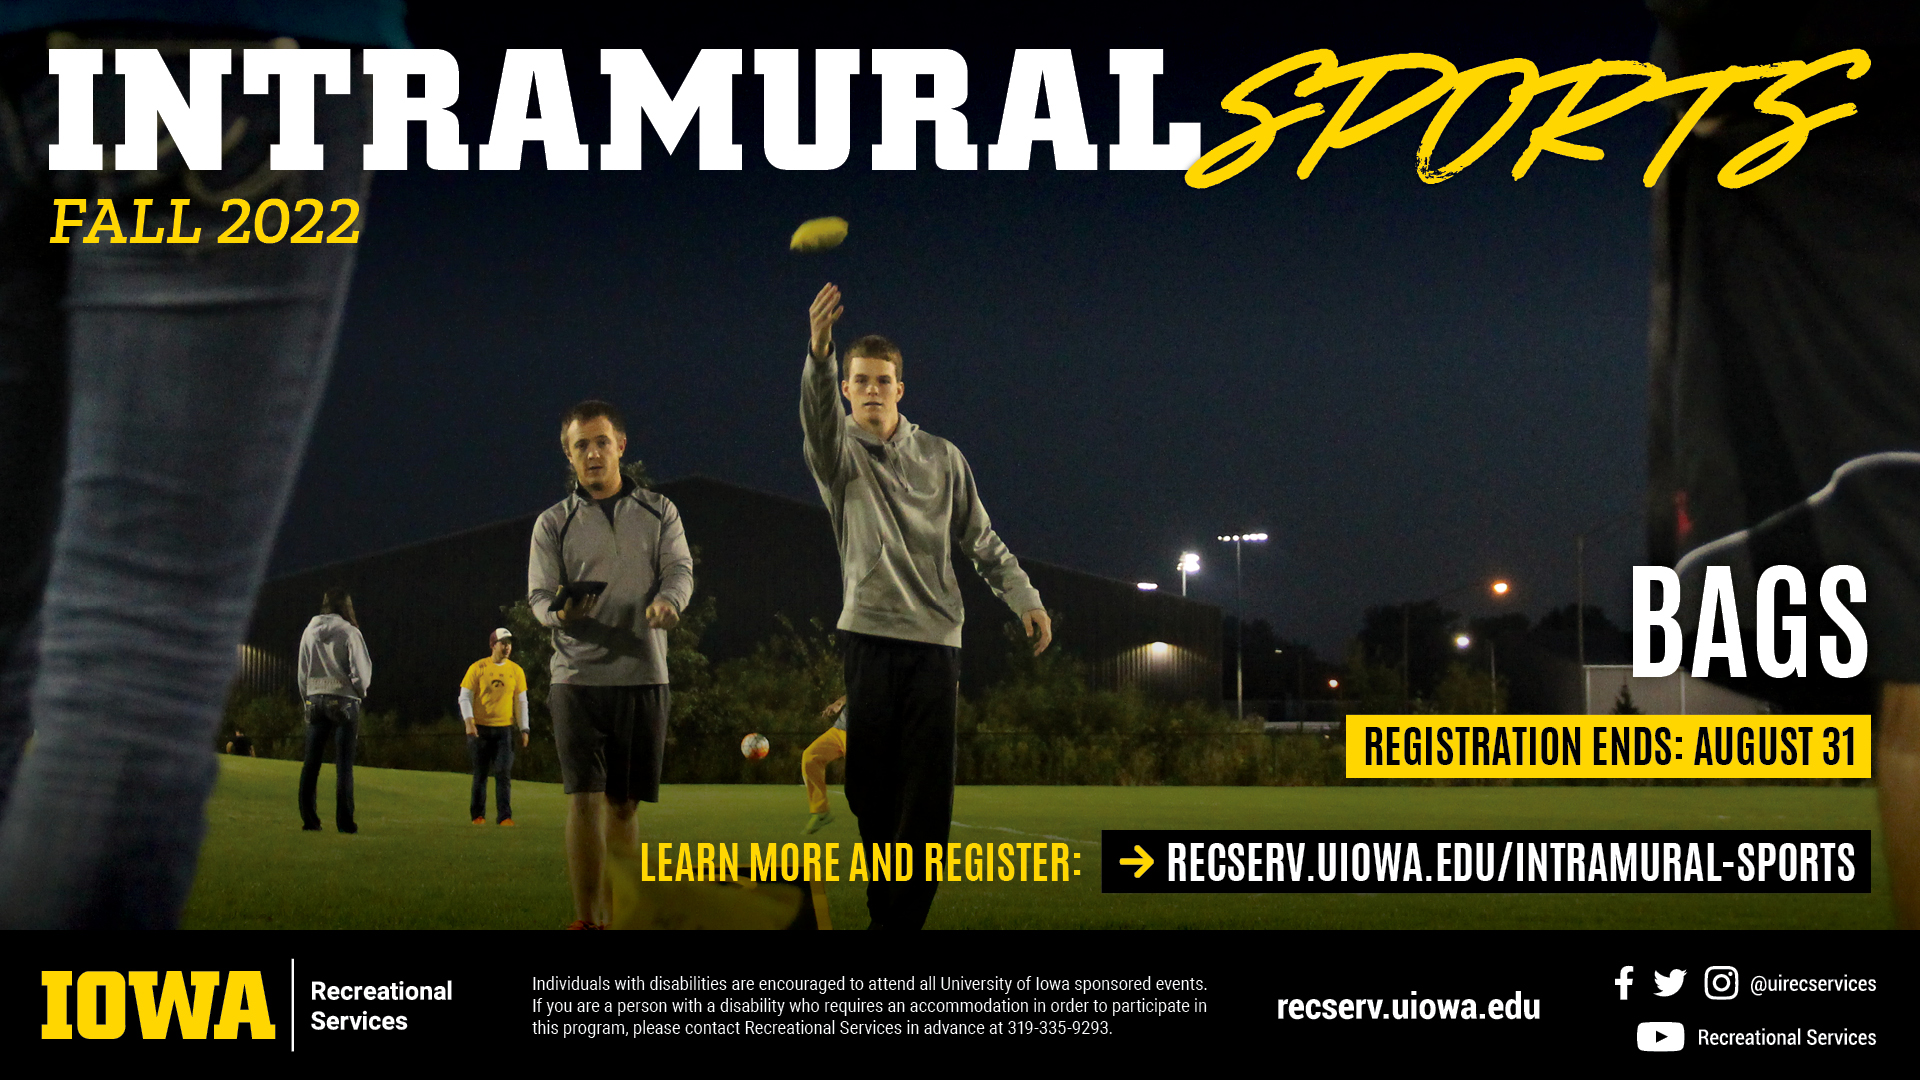 Intramural Sports Fall 2022: Bags. Learn more and register at reserv.uiowa.edu/intramural-sports